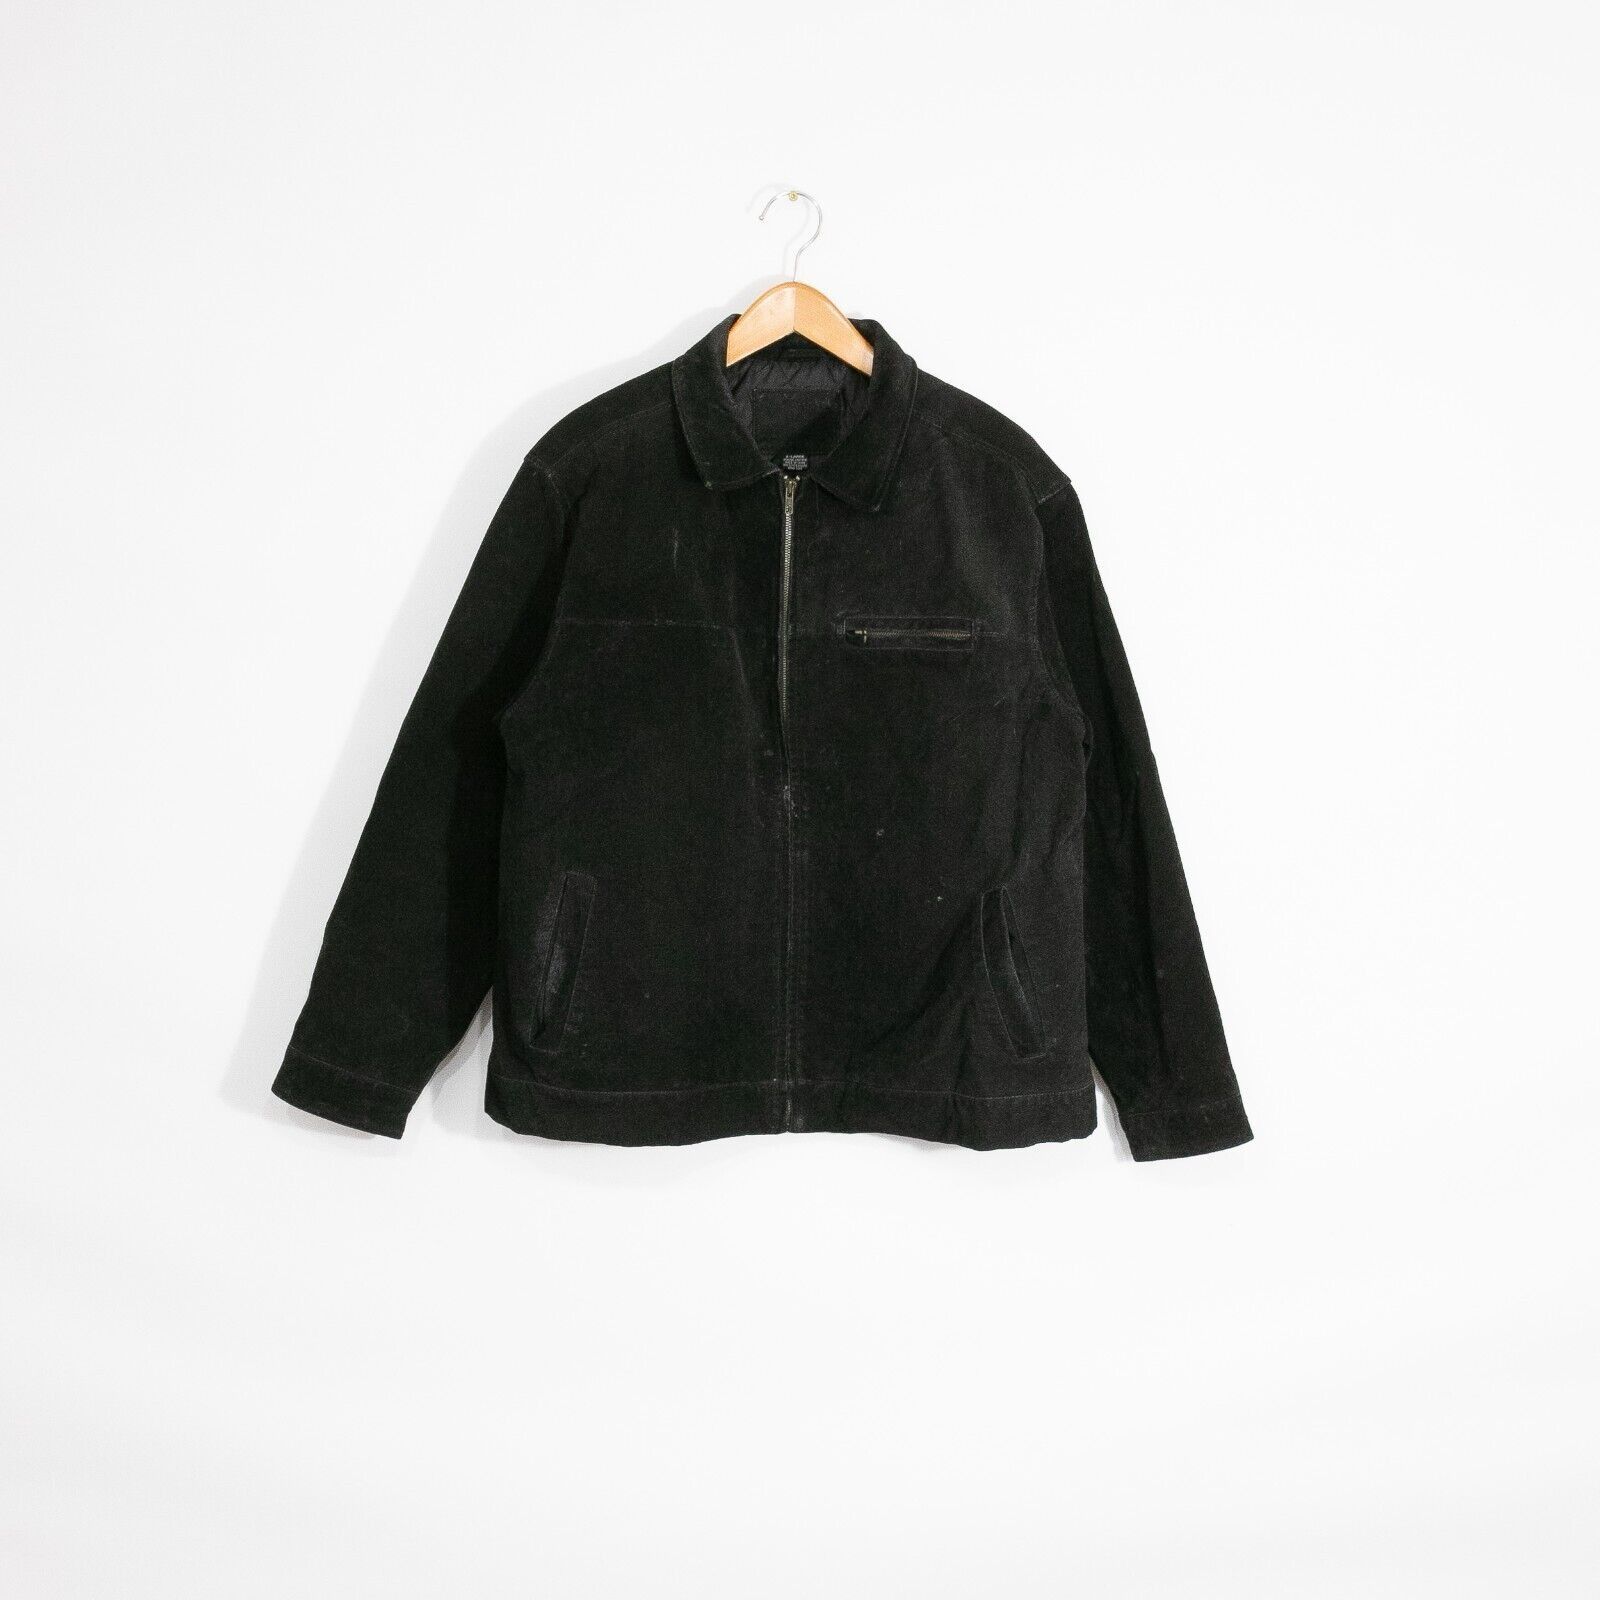 Vintage Vintage Black Suede Zip Up Jacket XL - Patina Distressed Size US XL / EU 56 / 4 - 1 Preview